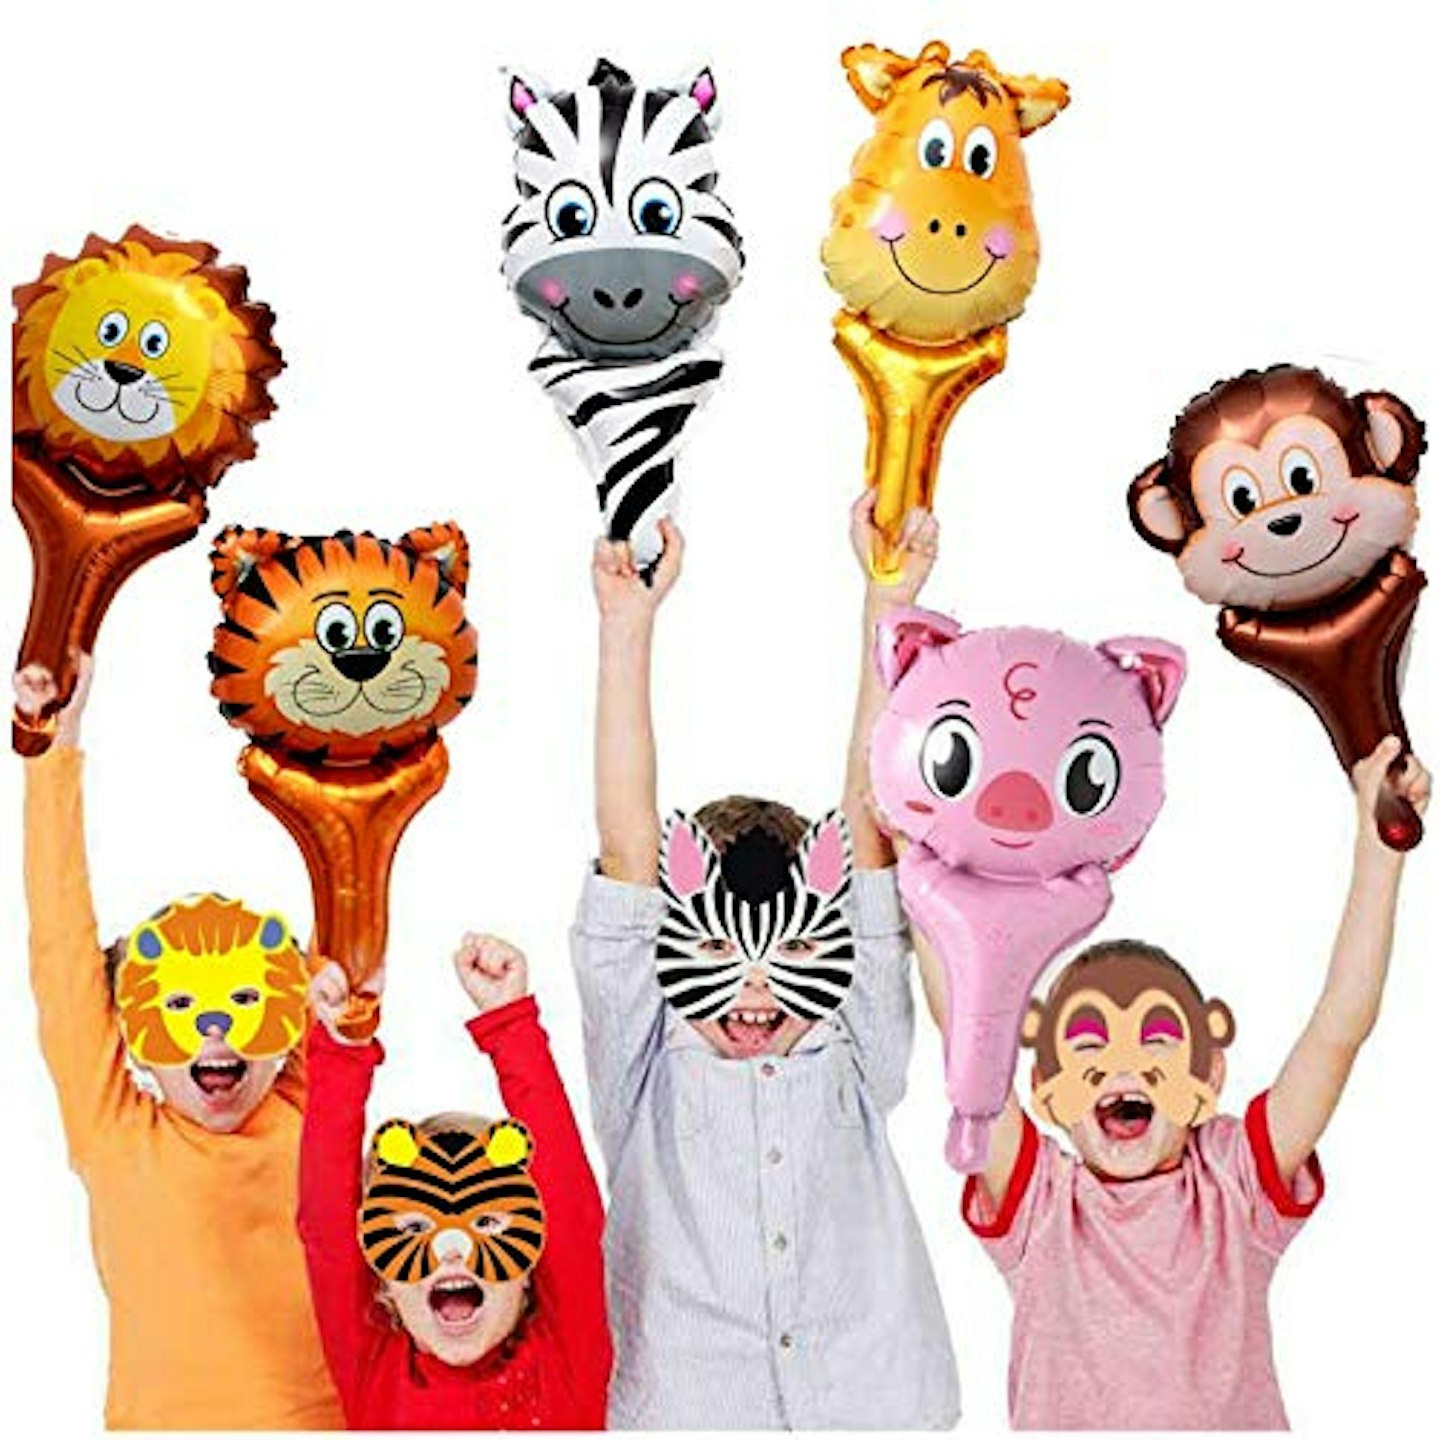 GuassLee Jungle Safari Animal Theme Party Set with 12pcs